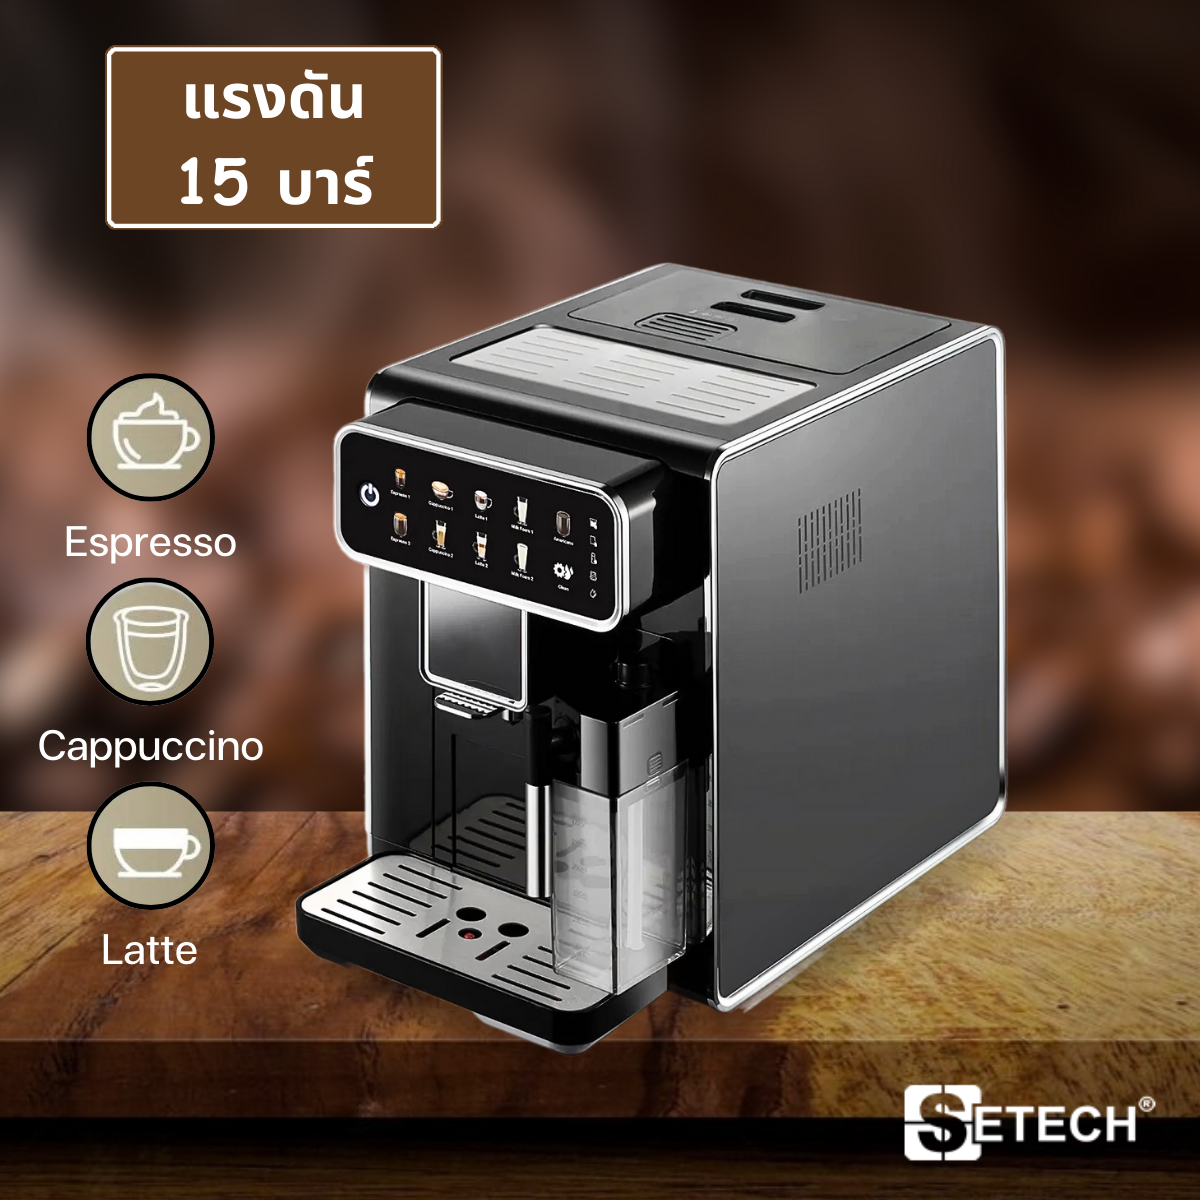 Automatic coffee maker 1350W touch screen SETECH